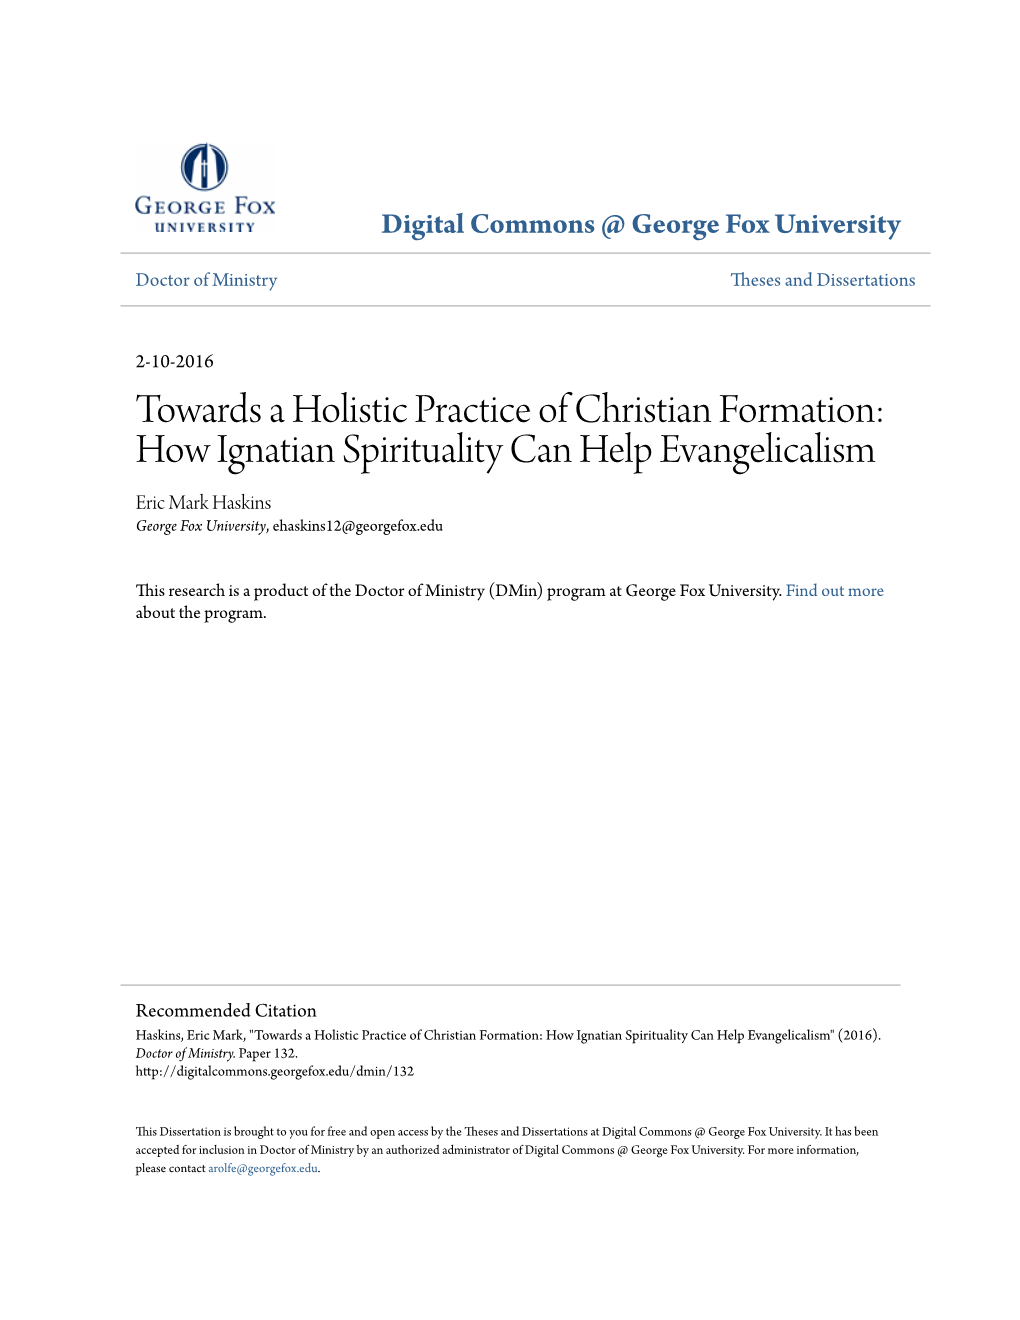 How Ignatian Spirituality Can Help Evangelicalism Eric Mark Haskins George Fox University, Ehaskins12@Georgefox.Edu